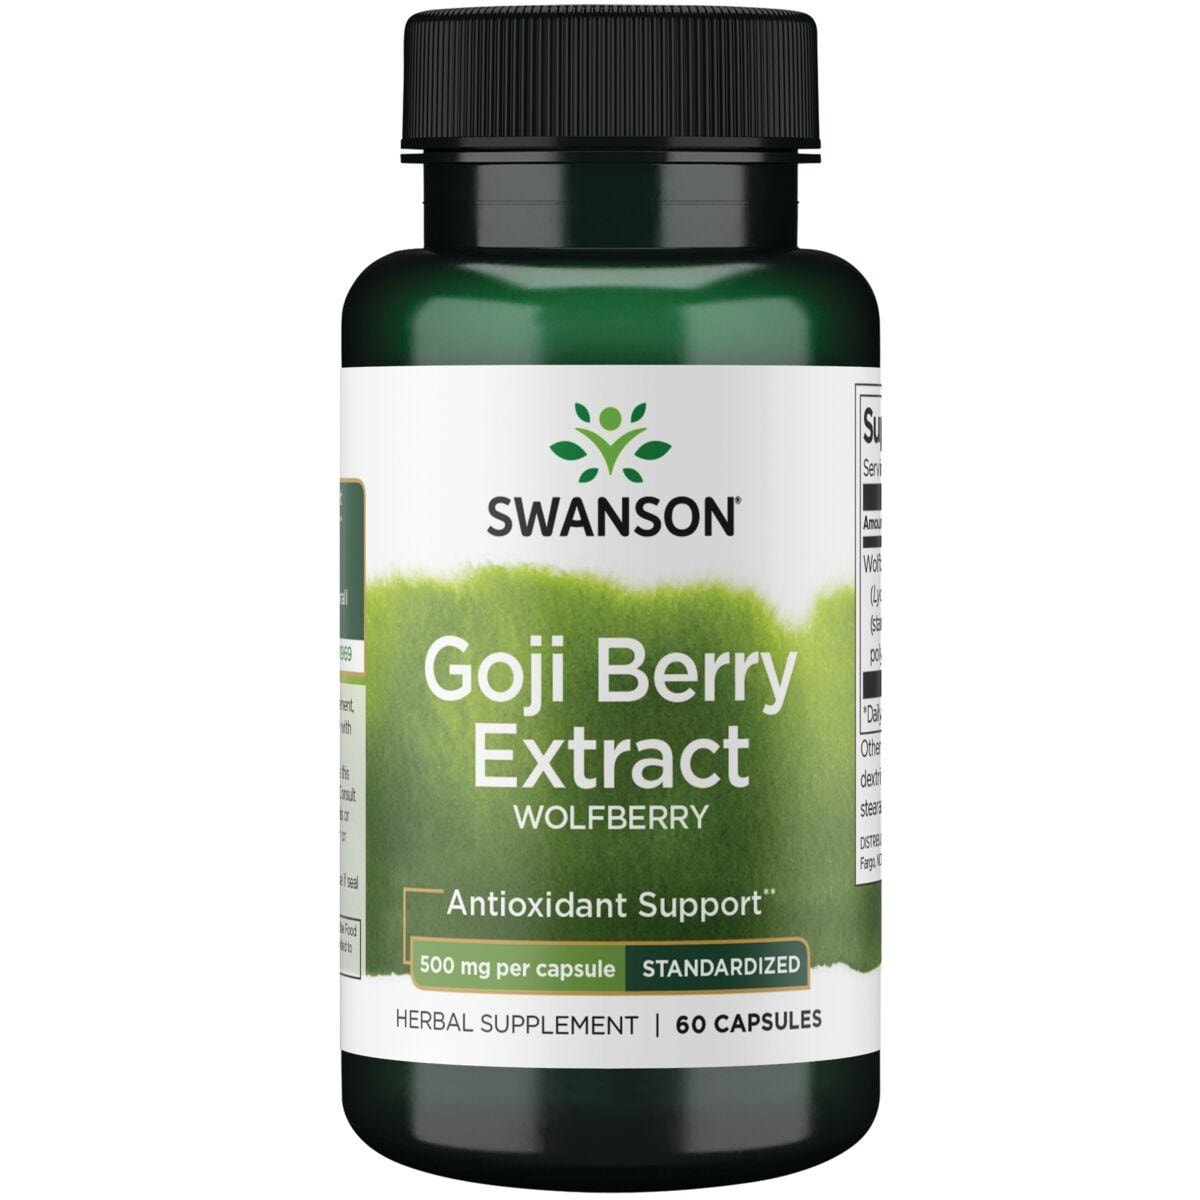 Swanson Superior Herbs Goji Berry Extract Wolfberry - Standardized Vitamin | 500 mg | 60 Caps